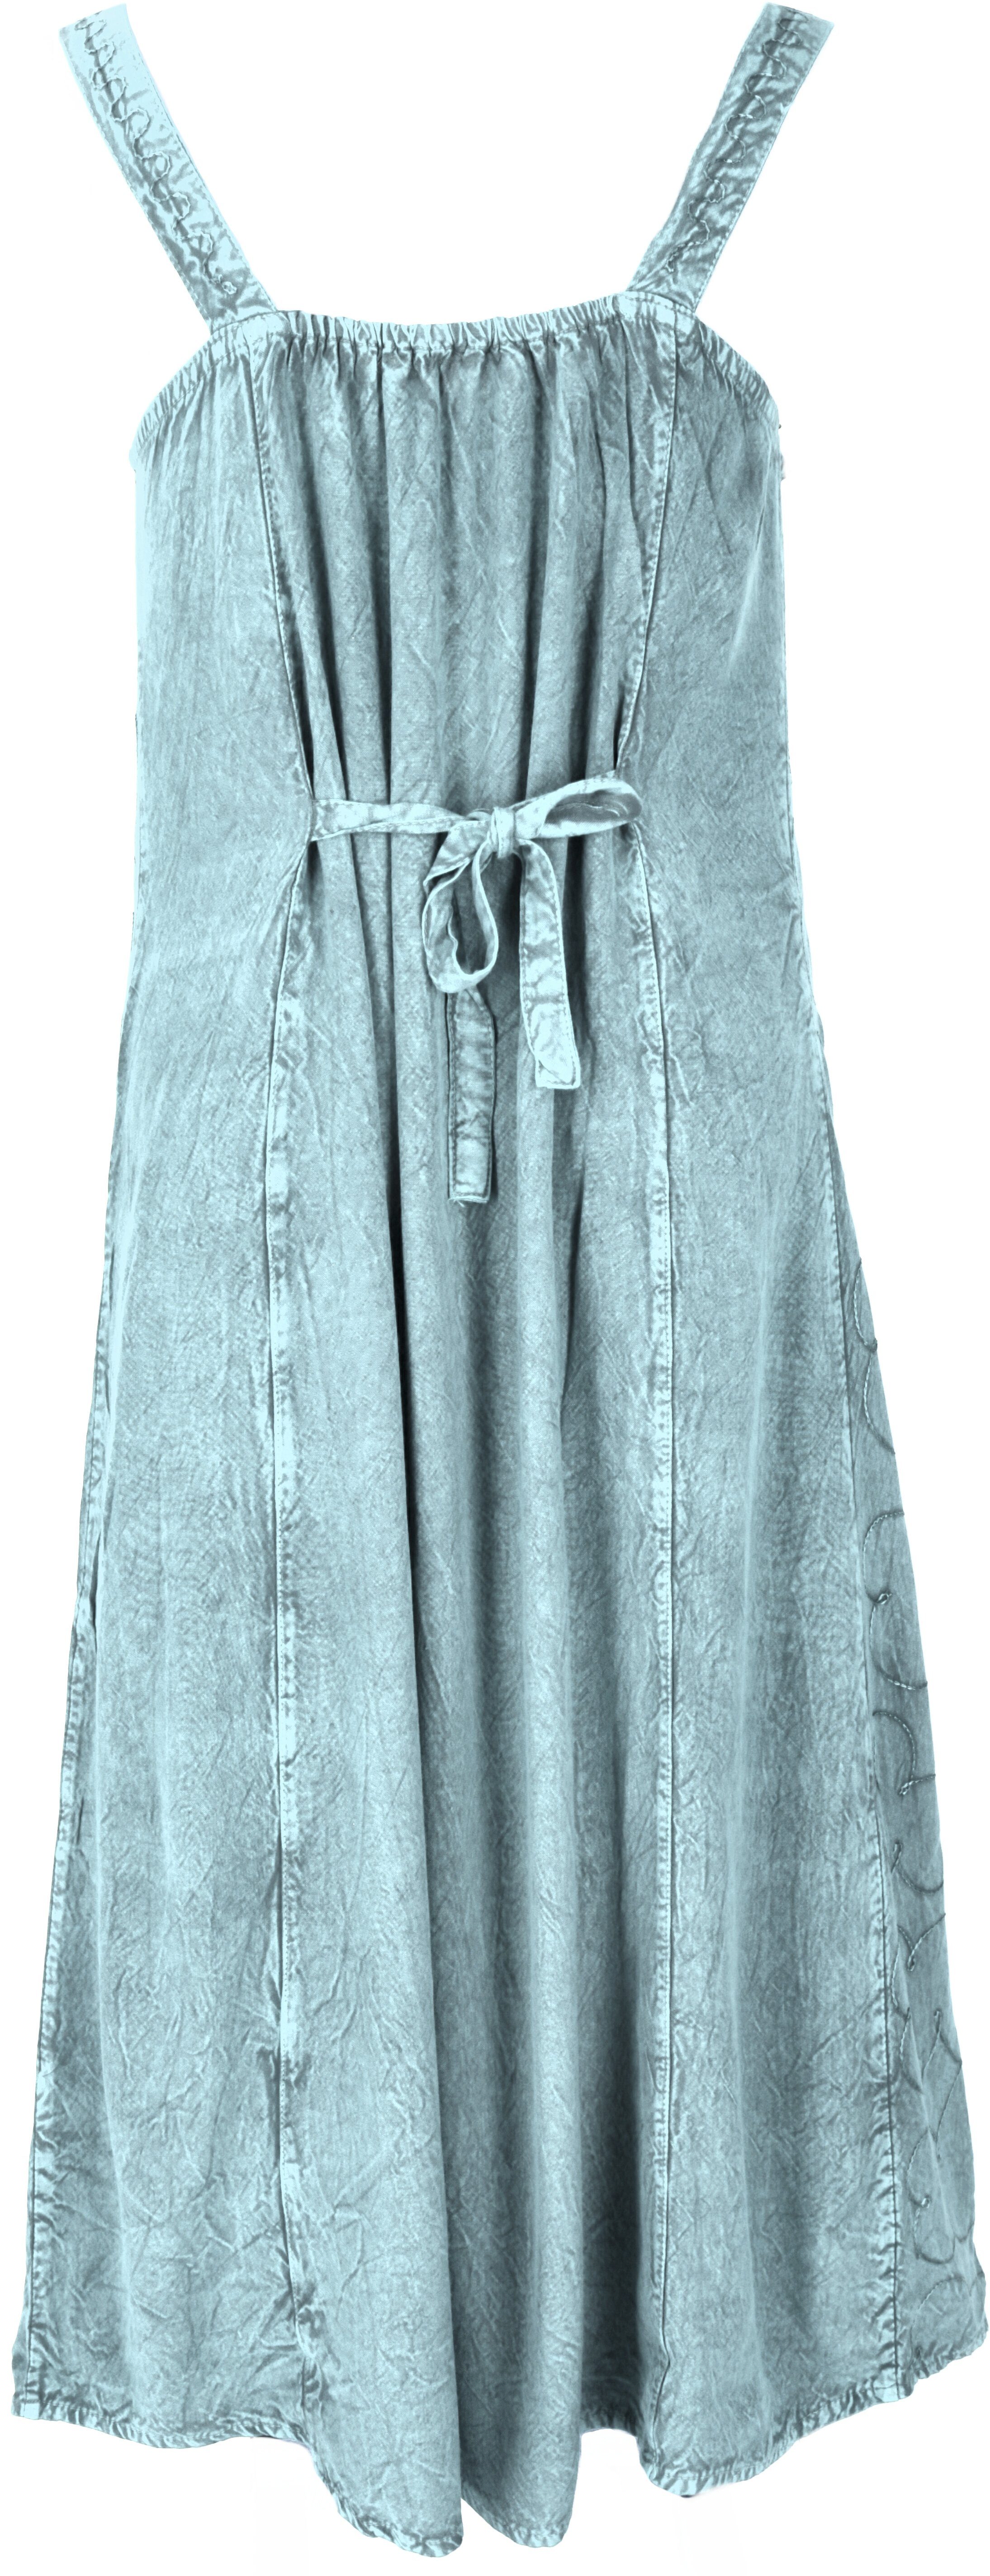 Guru-Shop chic Besticktes Midikleid -.. Bekleidung Boho Sommerkleid hellblau alternative indisches